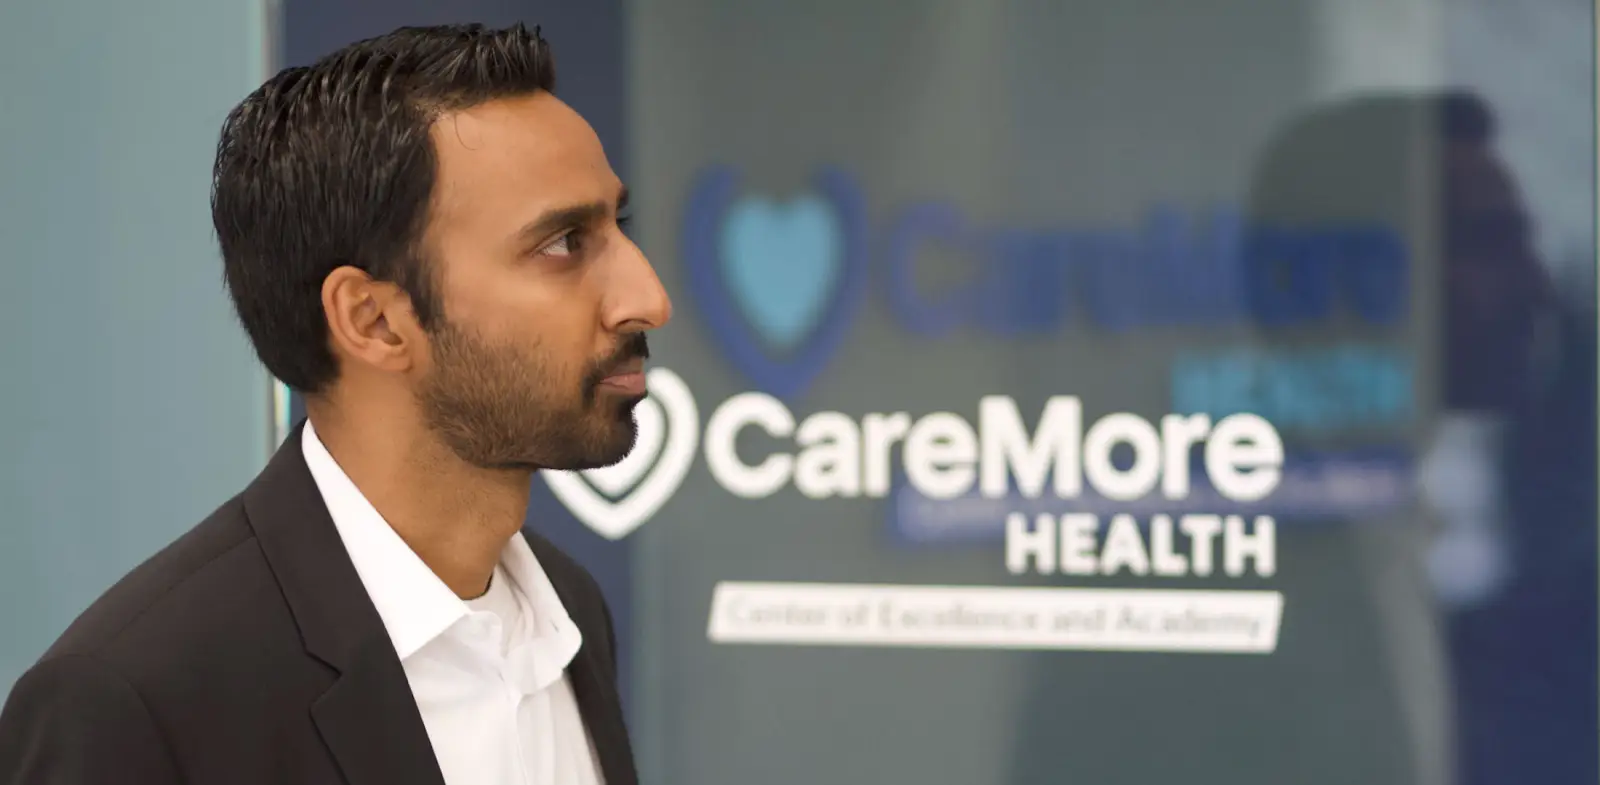 caremore health, Dr. Vivek Garg, CareMore’s Chief Medical Officer